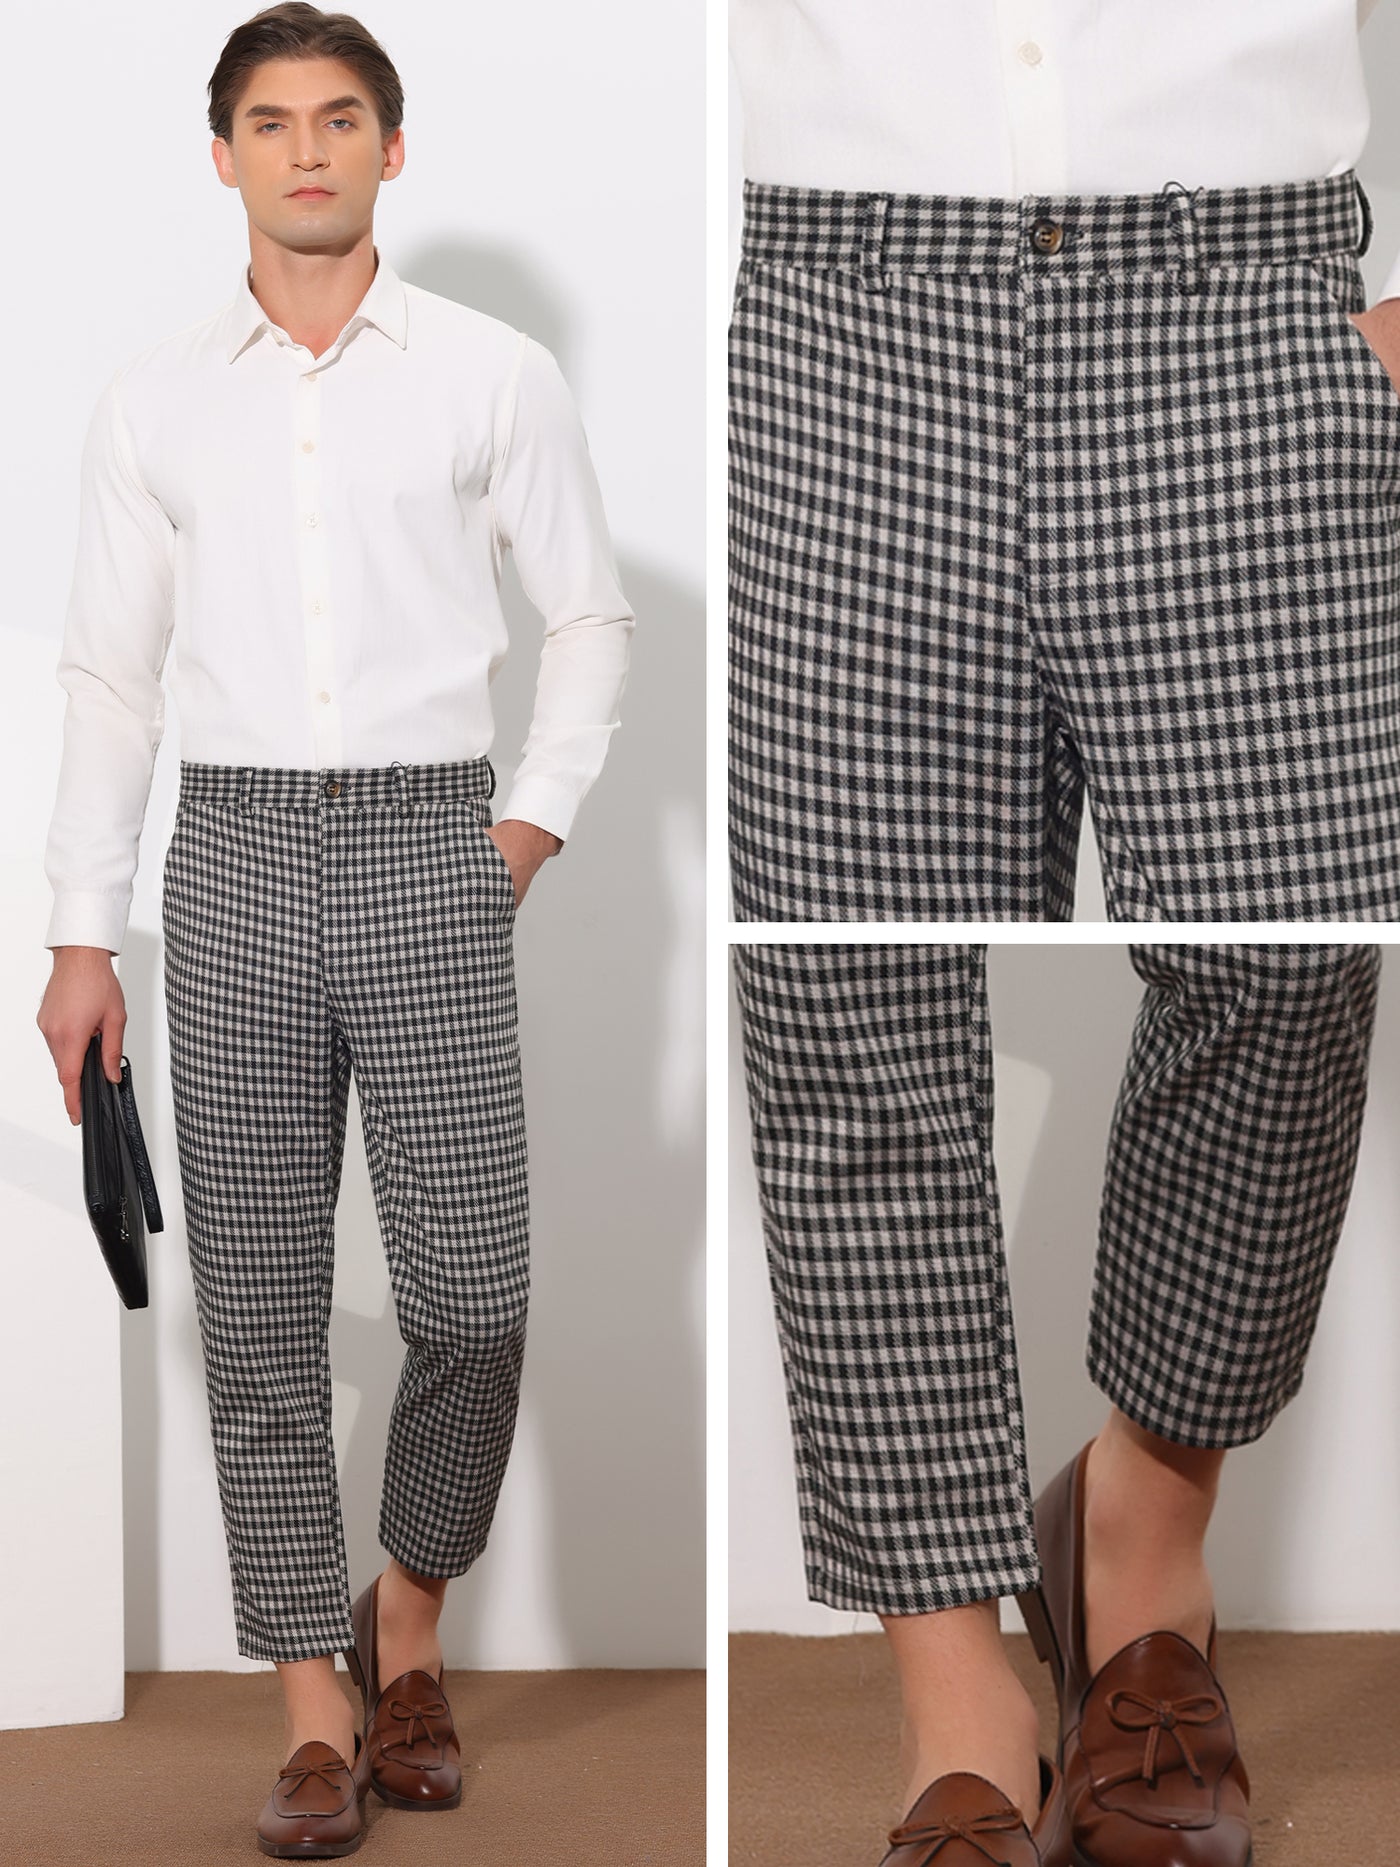 Bublédon Plaid Dress Pants for Men's Flat Front Contrasting Colors Irregular Pattern Trousers